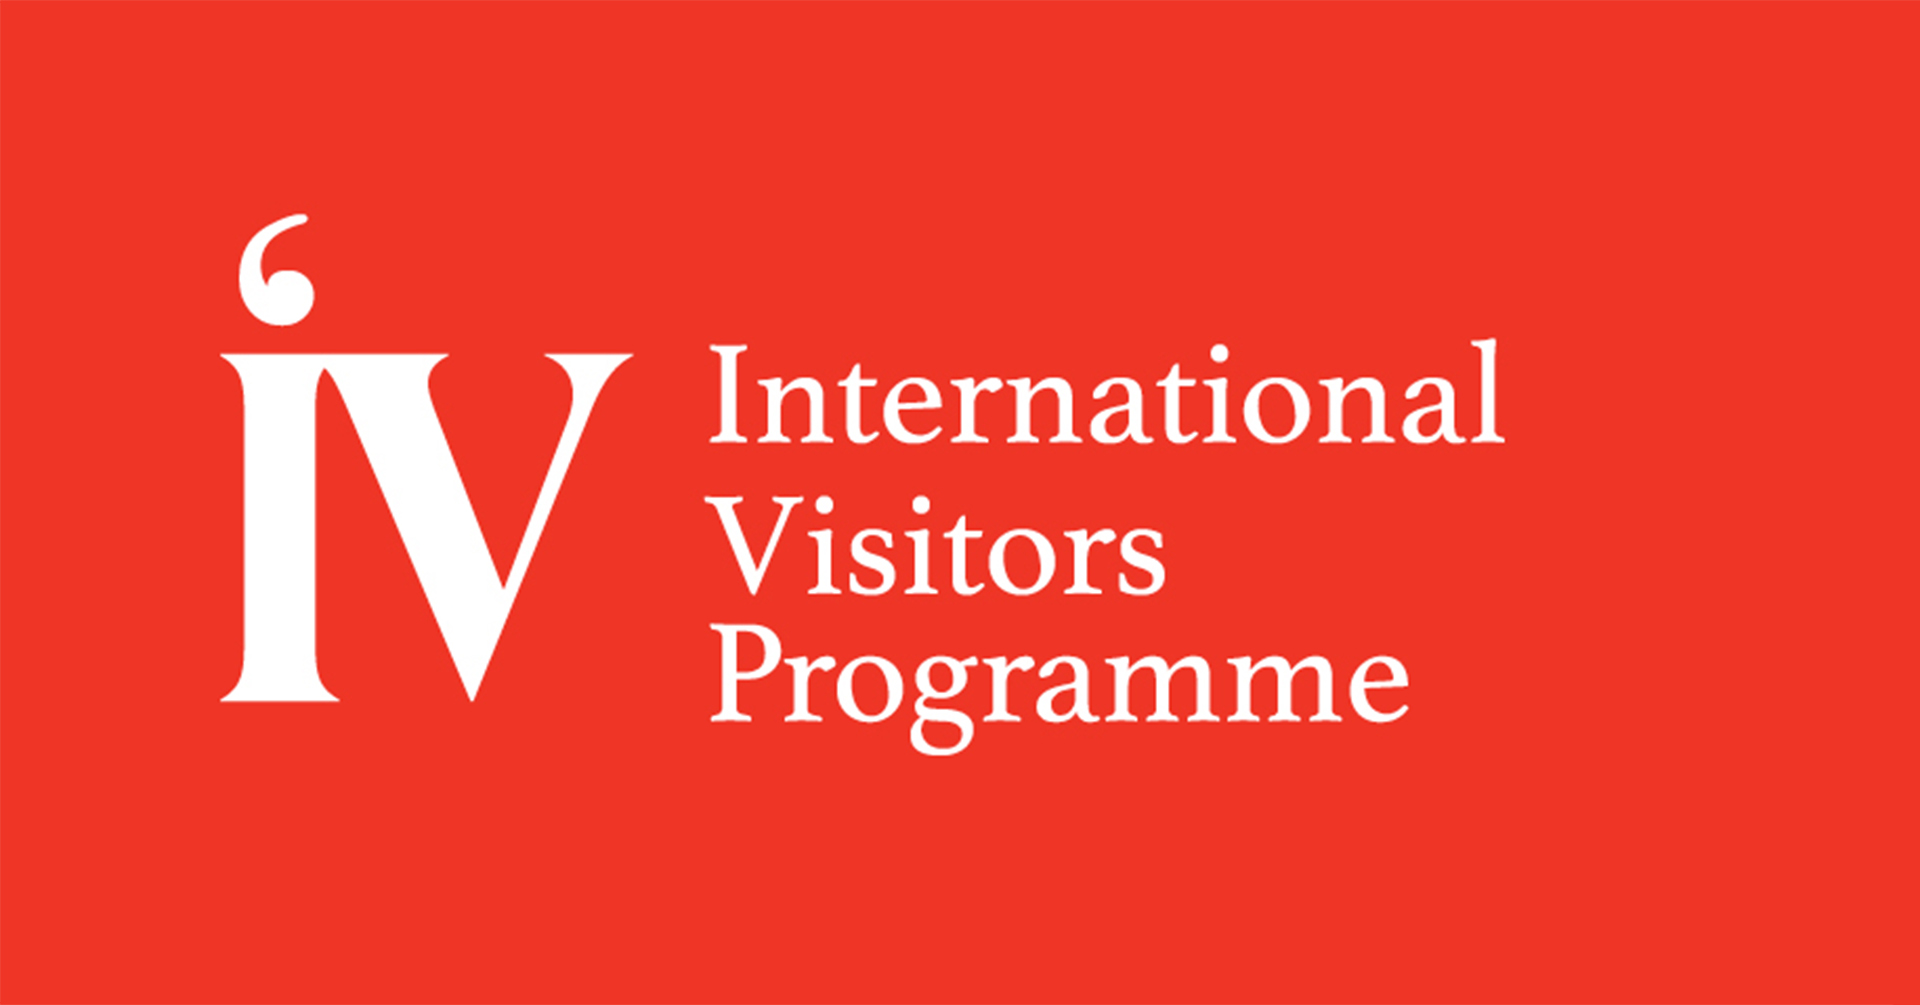 IV International Visitors Programme